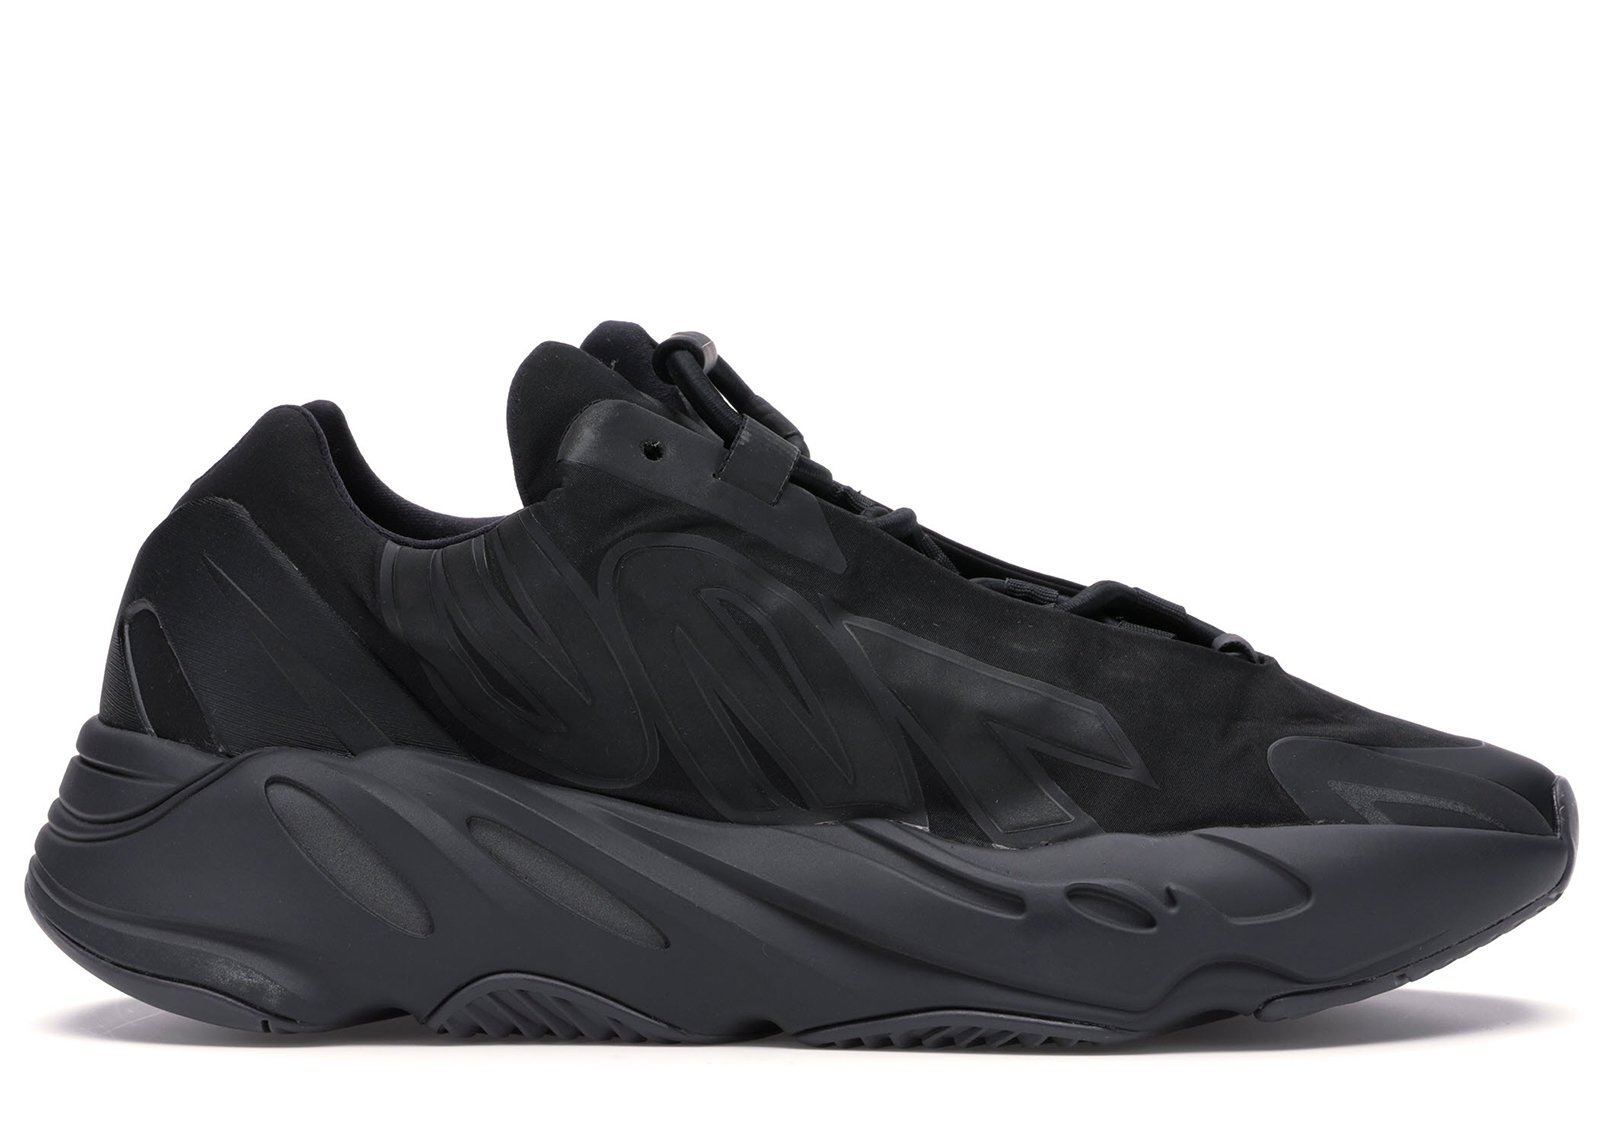 adidas Yeezy Boost 700 MNVN Triple Black sneakers